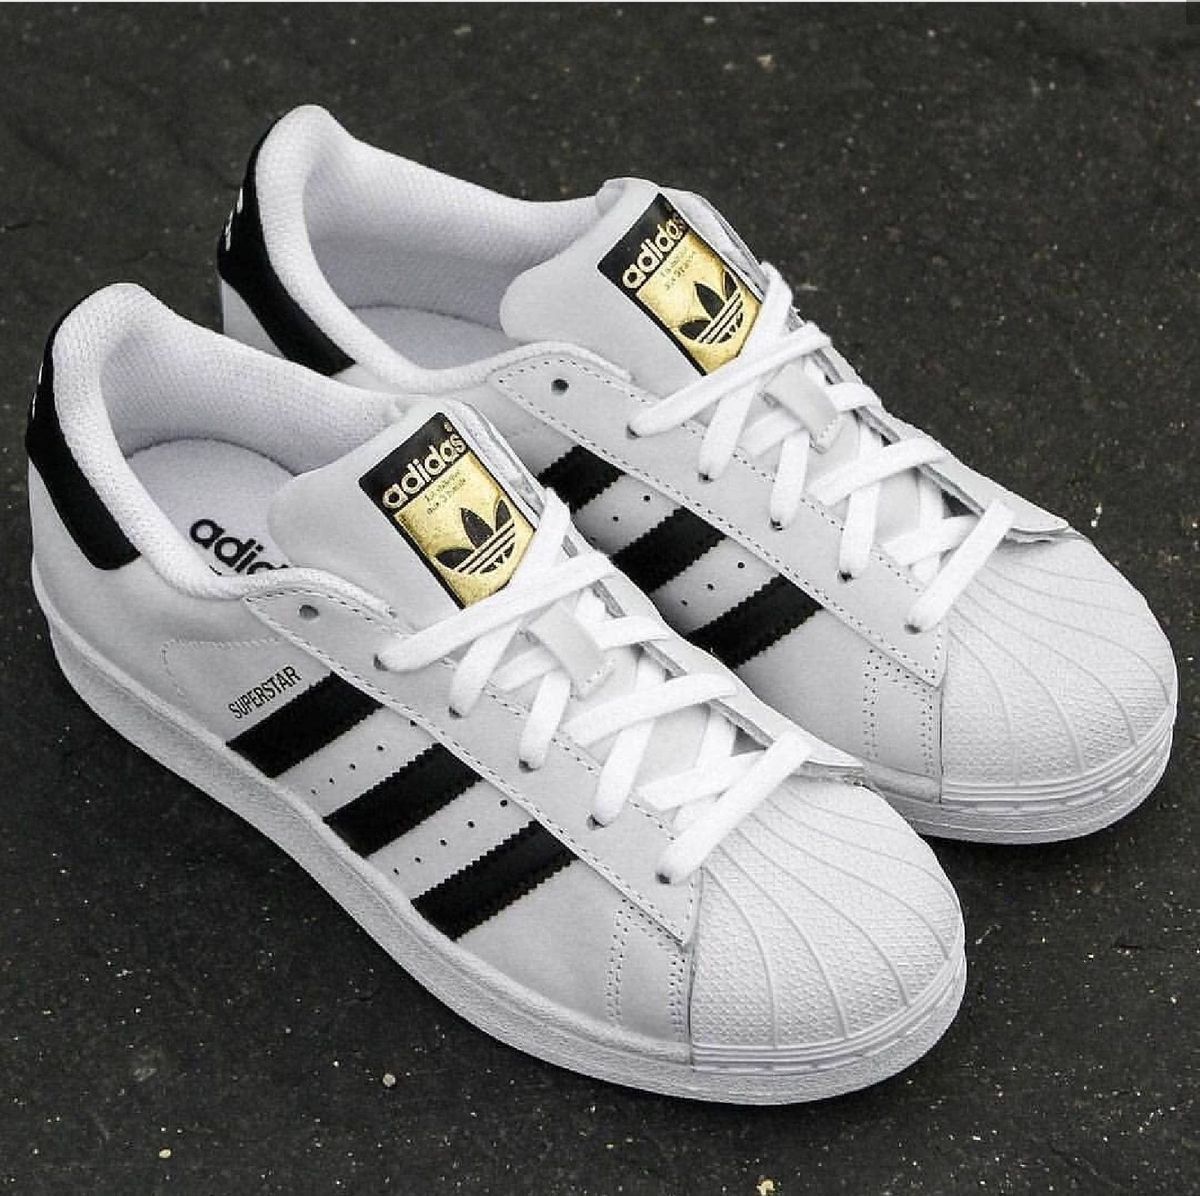 Tênis Adidas Superstar Branco/Preto